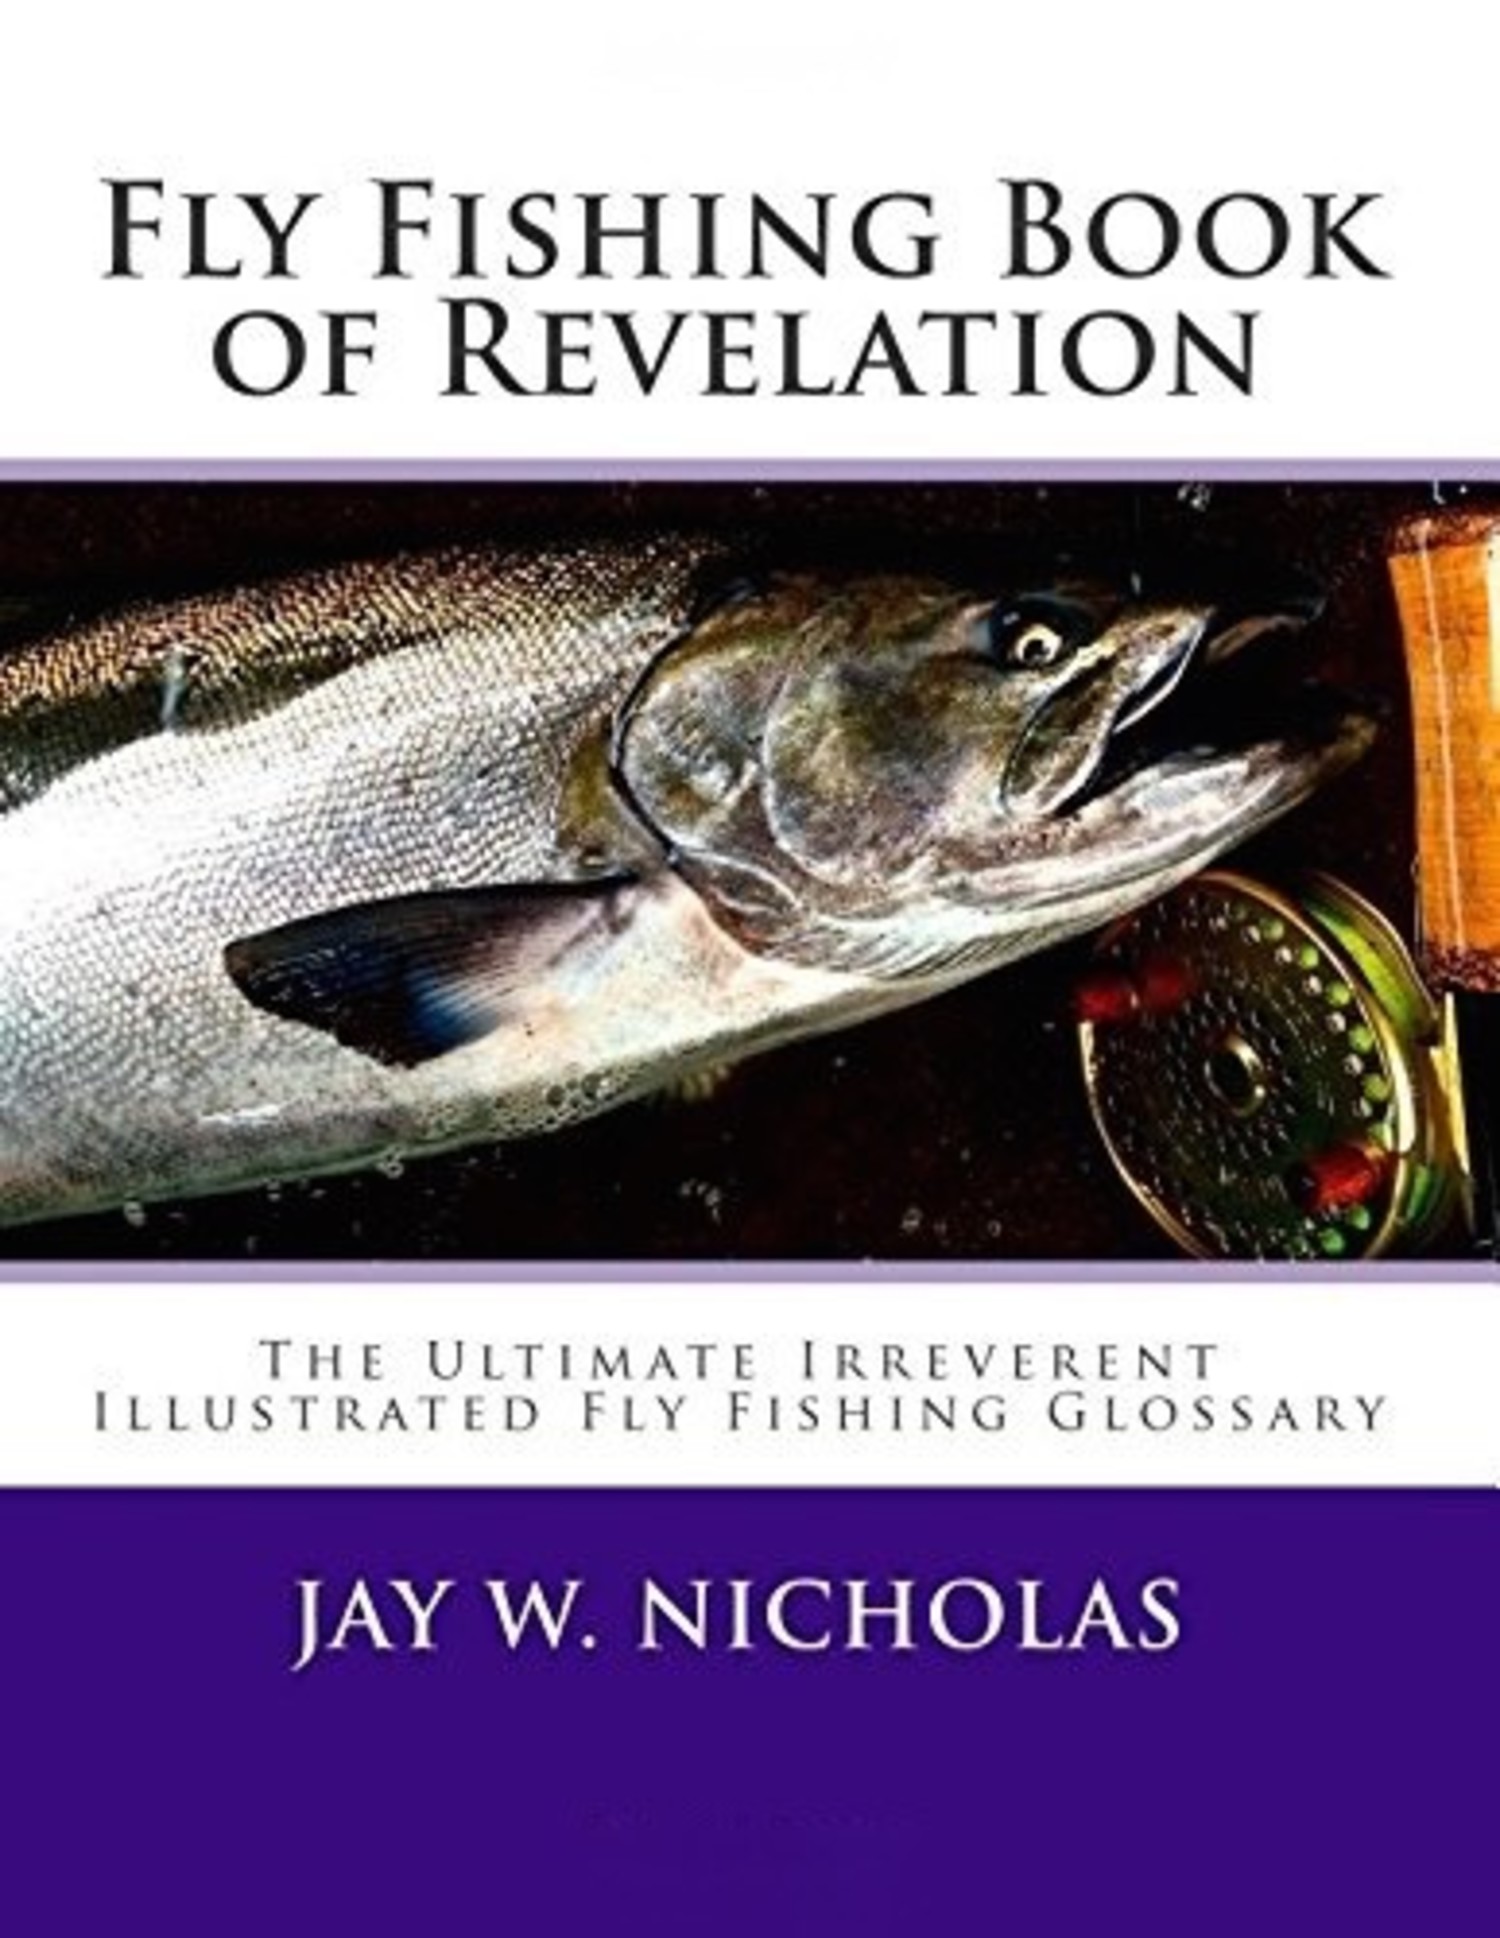 https://cdn.shoplightspeed.com/shops/618341/files/10329179/1500x4000x3/jay-nicholas-fly-fishing-book-of-revelation-by-jay.jpg